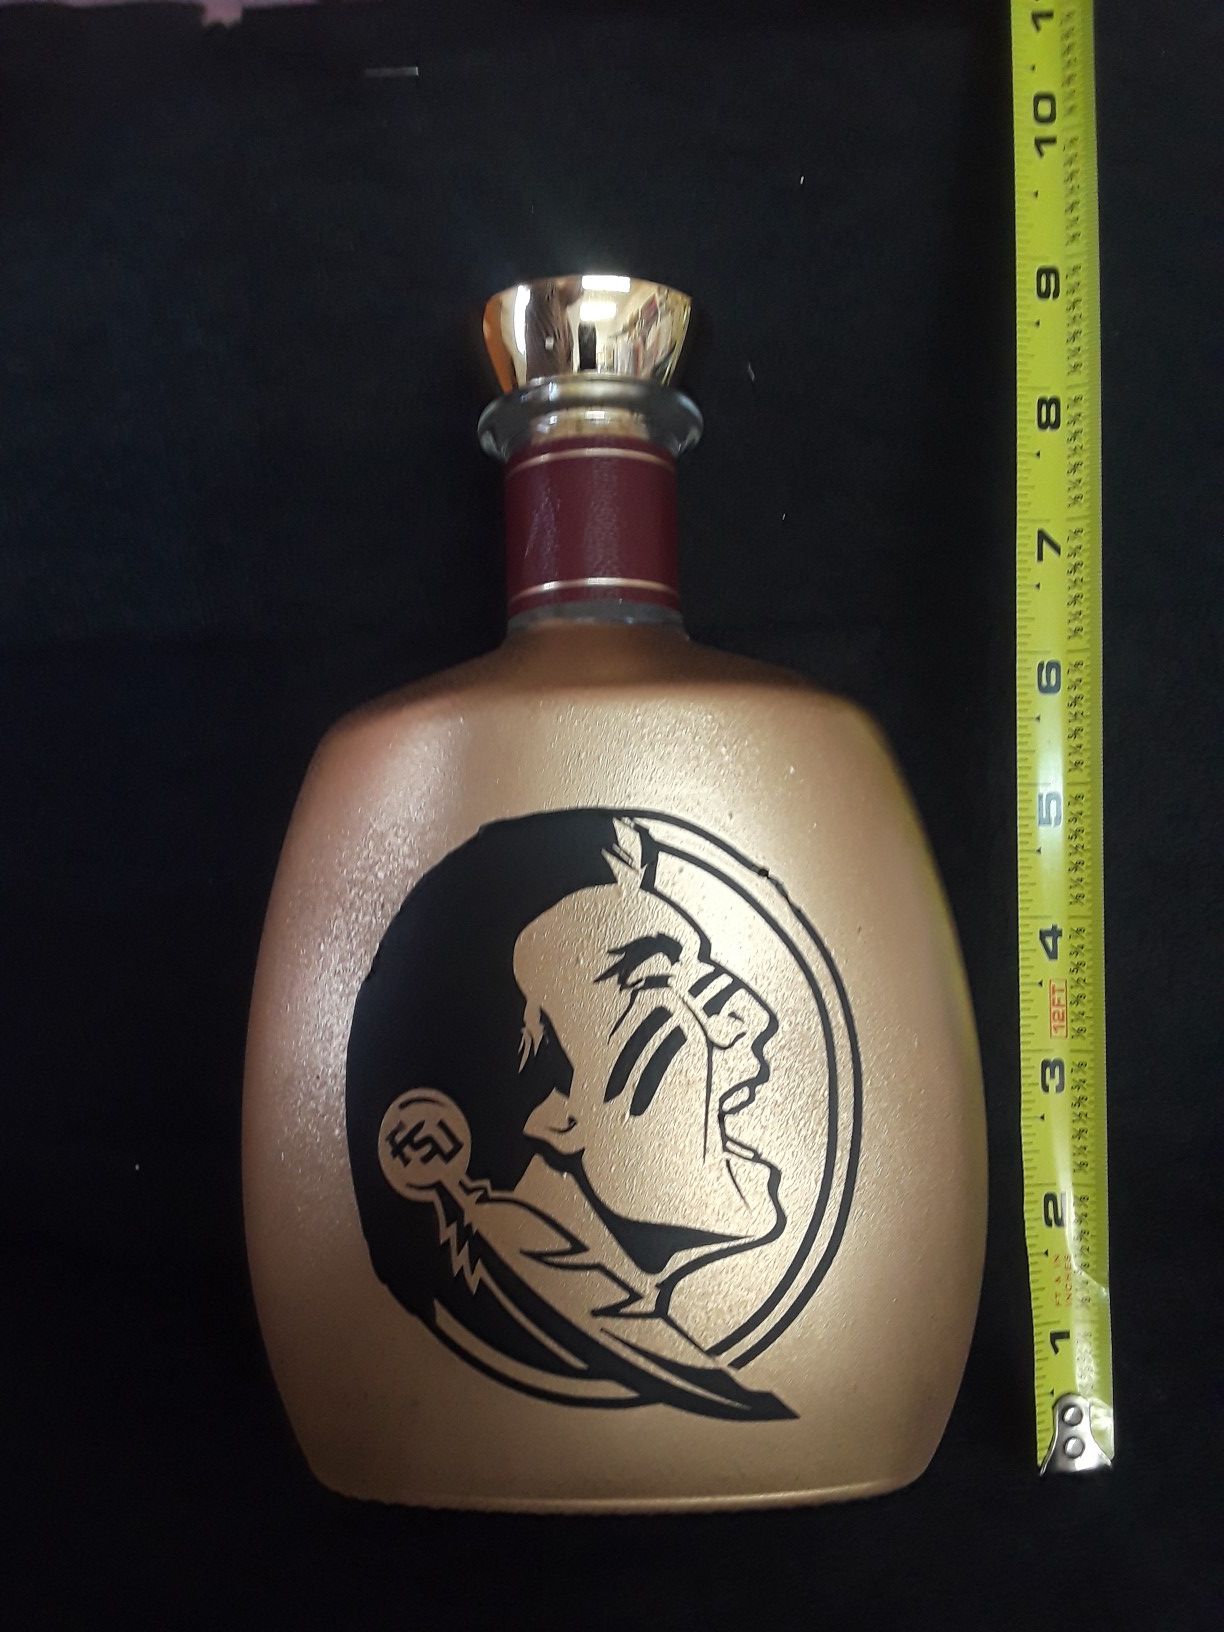 fsu redesigned bottle 9" tall